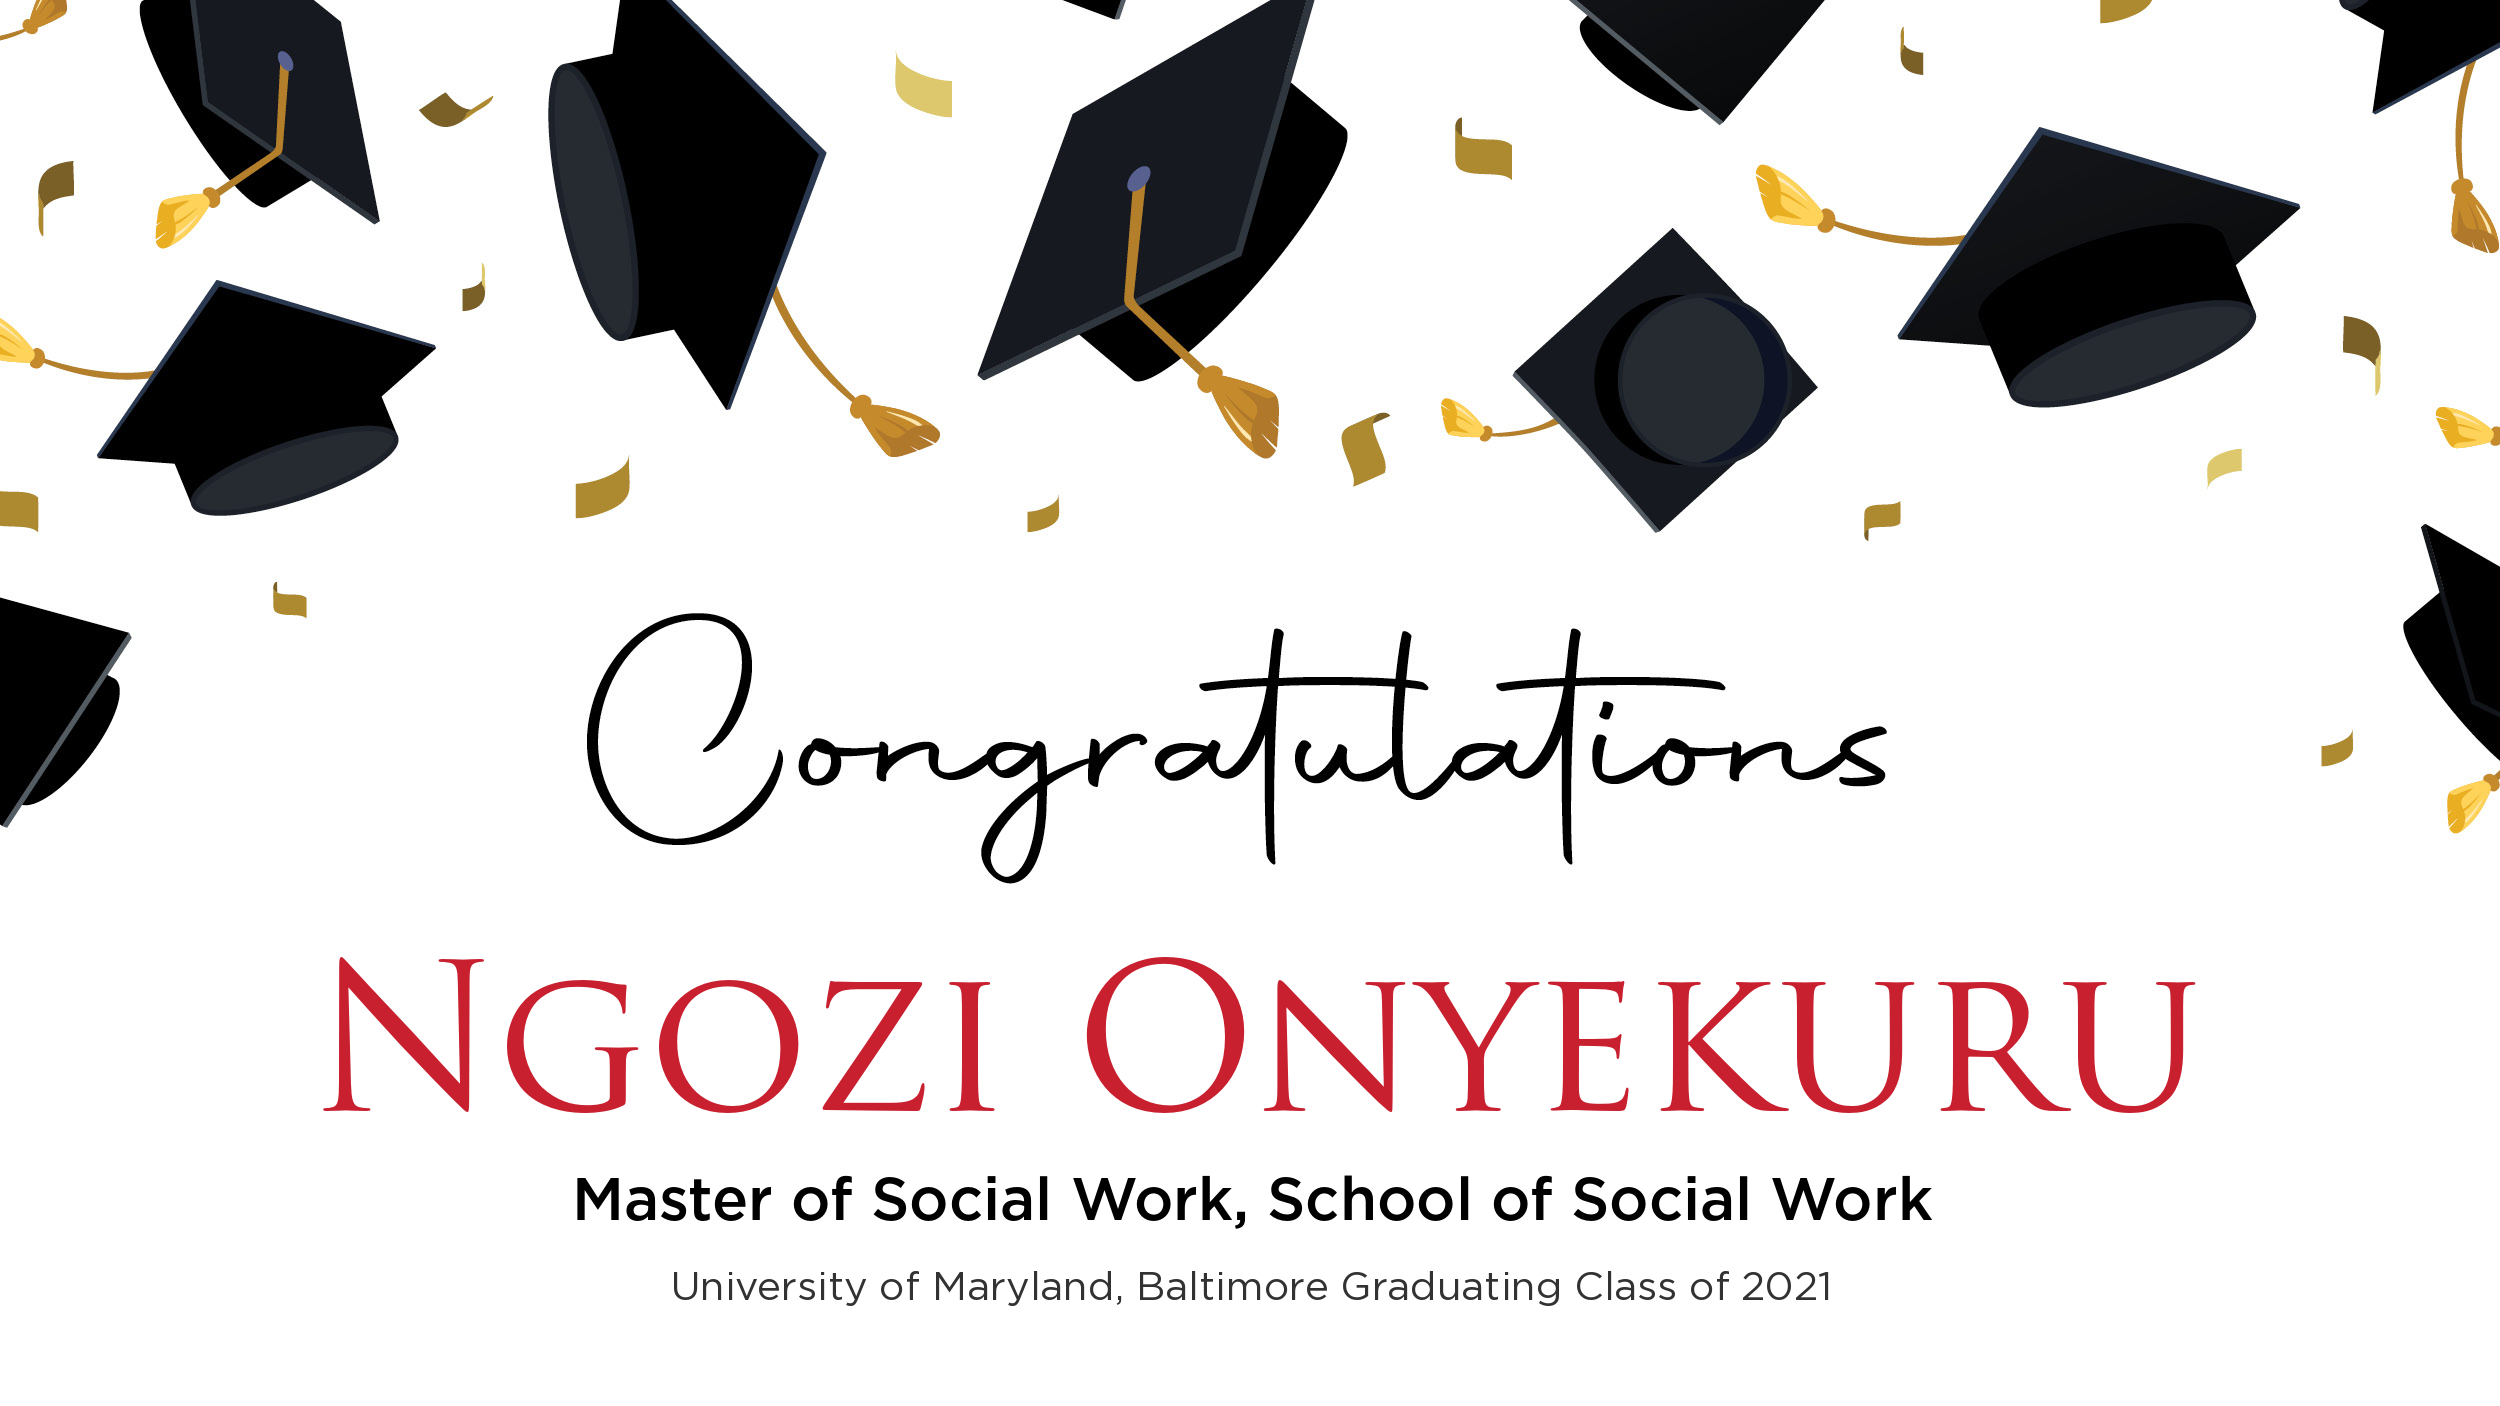 Congratulations Ngozi Onyekuru, Master of Social Work